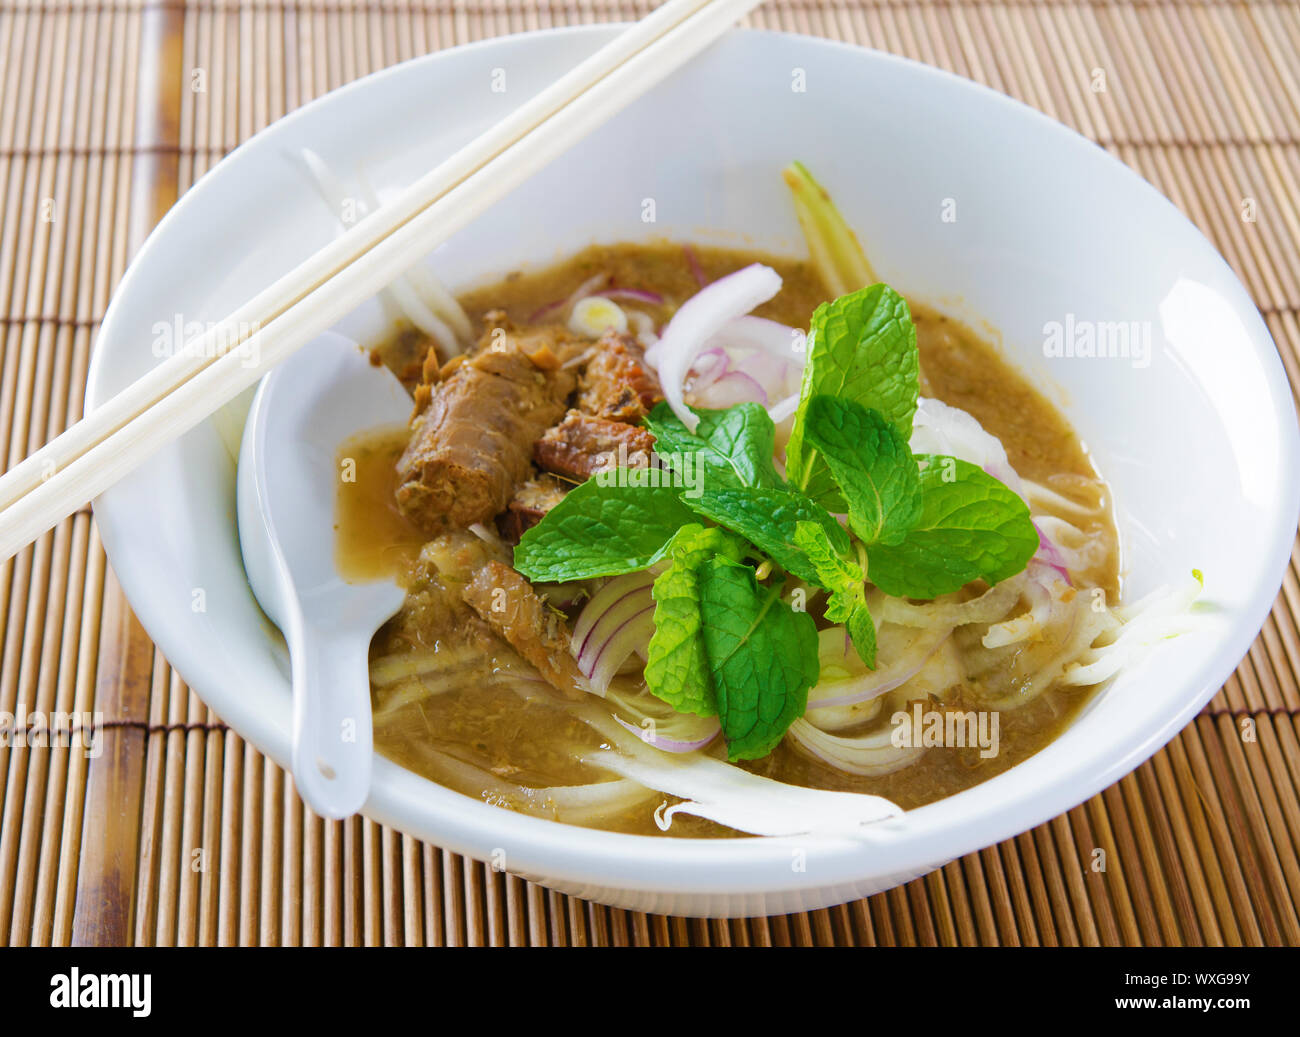 Assam or asam laksa.  Delicious traditional Malay dish, malaysian food, Asian cuisine. Stock Photo